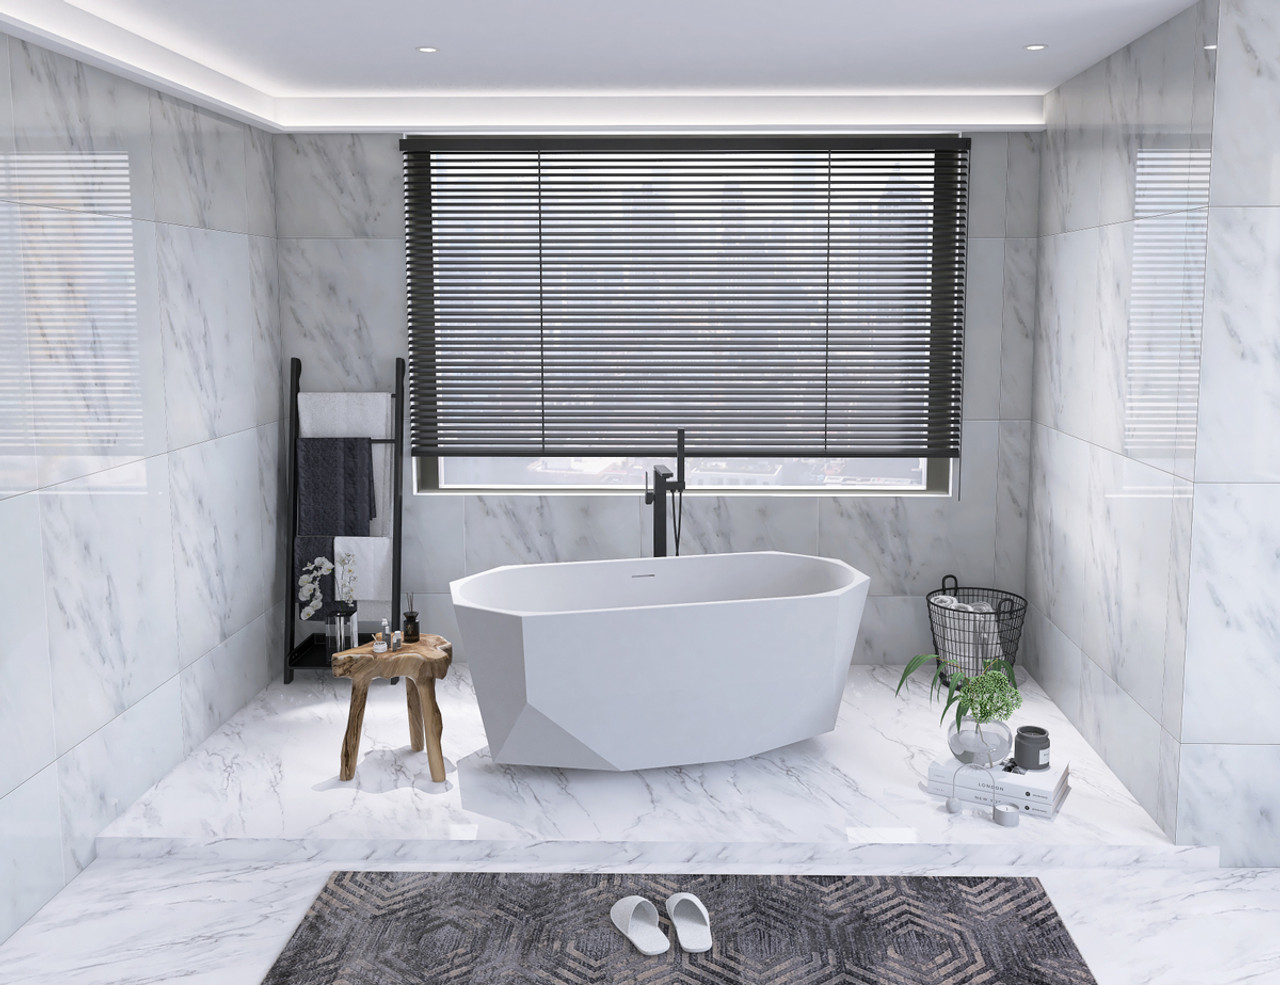 Elegant Kitchen and Bath BT21159GW 59 inch soaking diamond style bathtub in glossy white